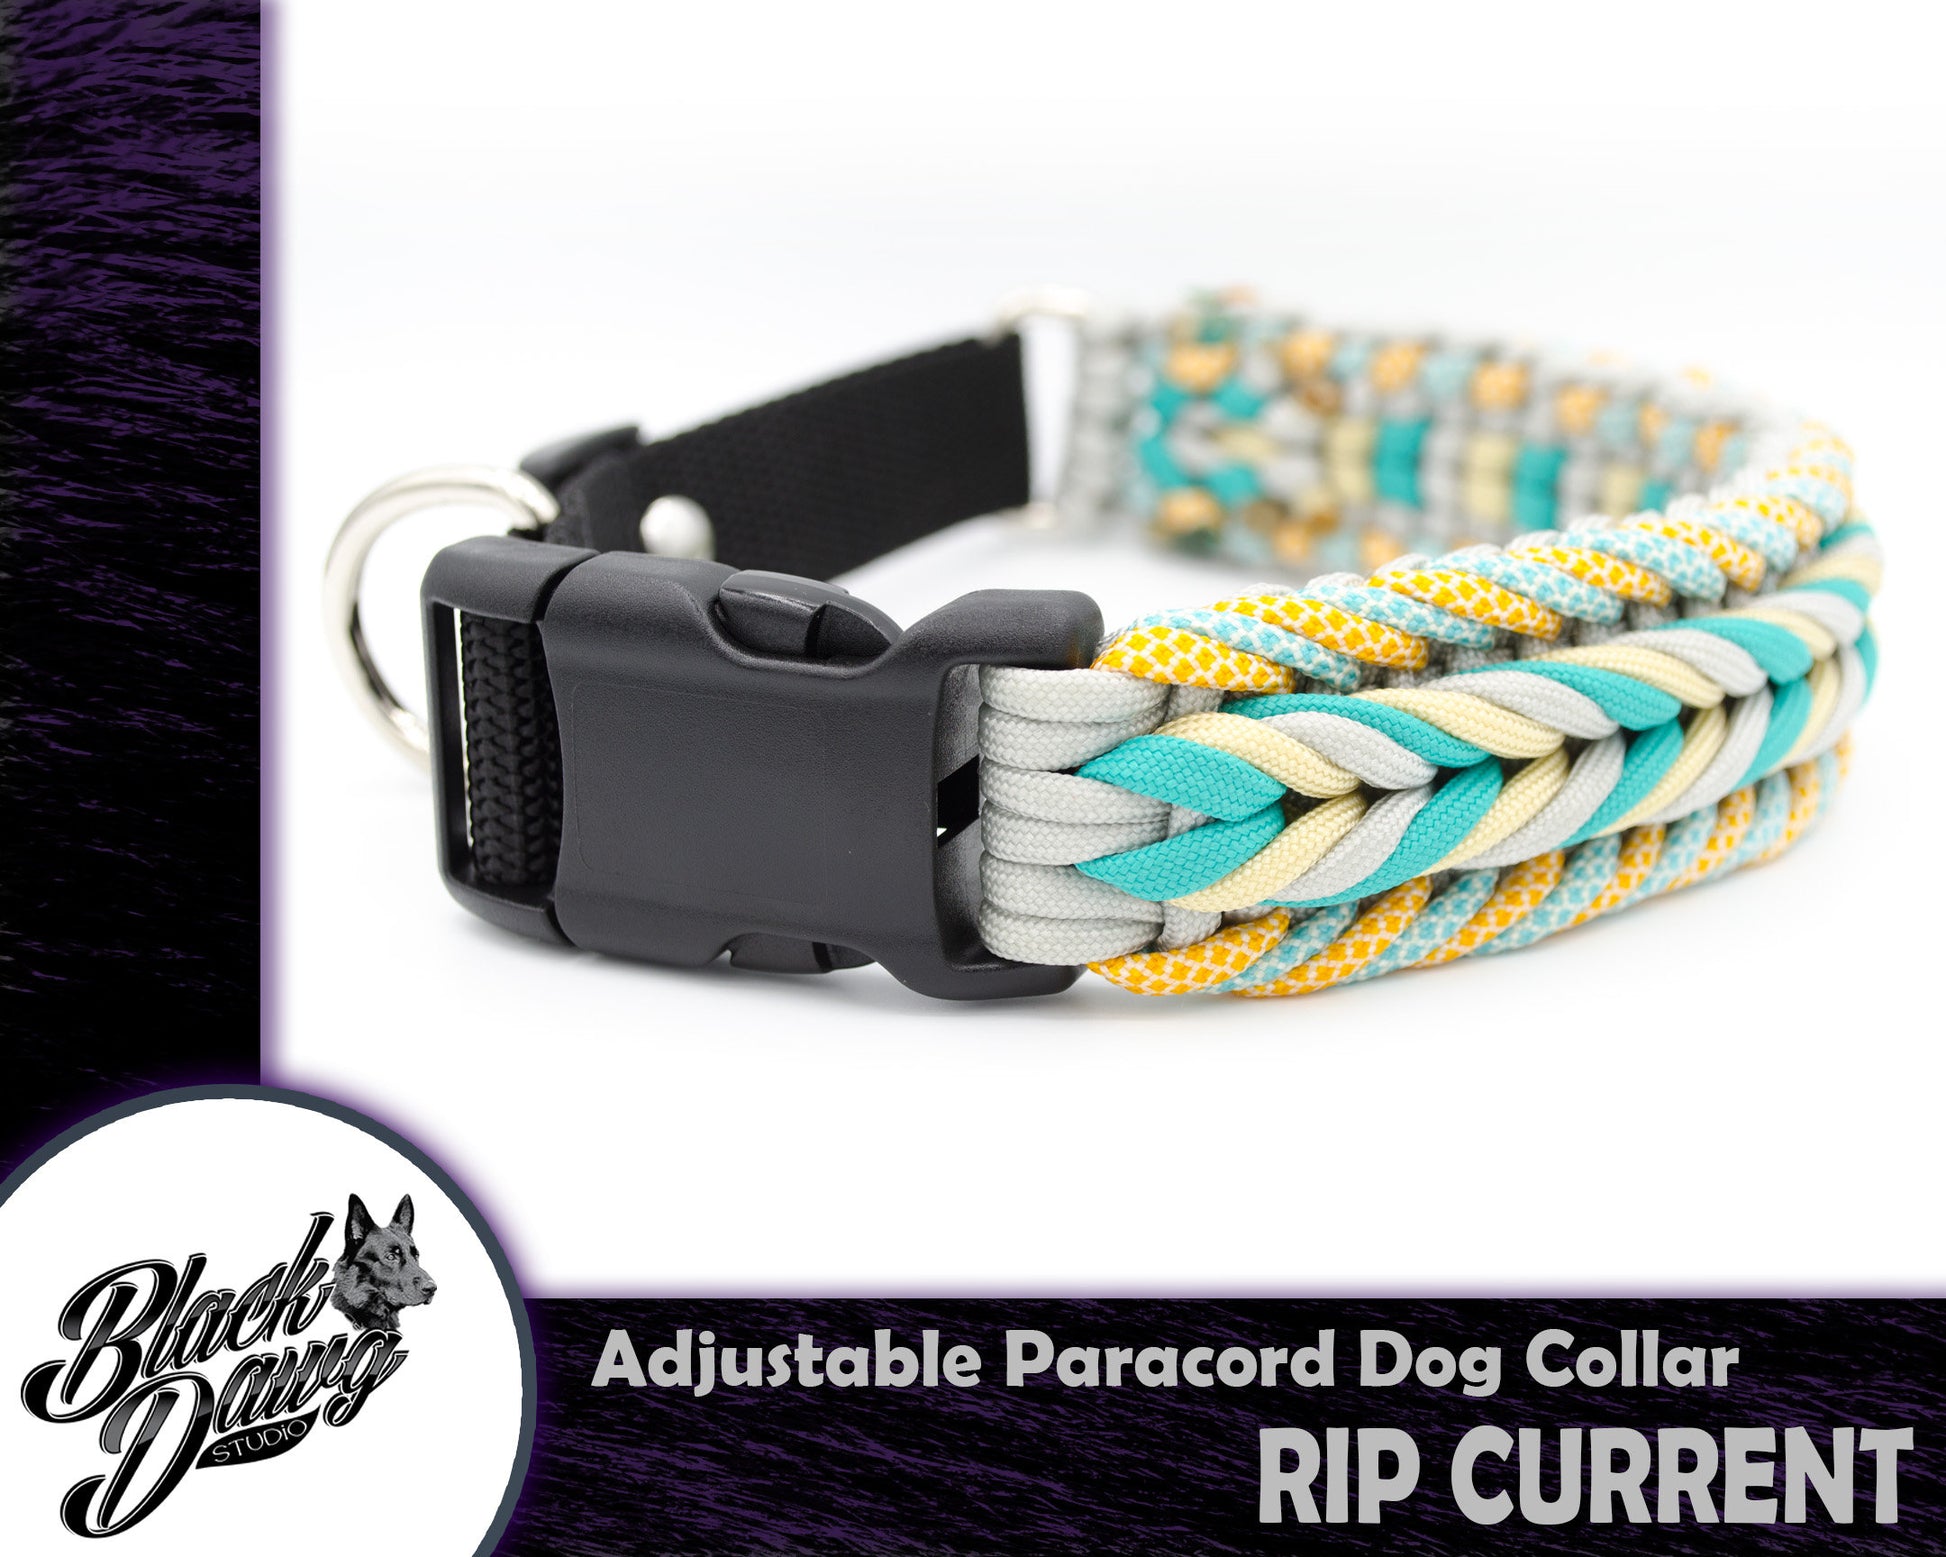 Rip Current Design Adjustable 17"-19" Paracord Dog Collar - Teal, Cream, Silver Grey, Diamond Turquoise/Cream, Honeycomb